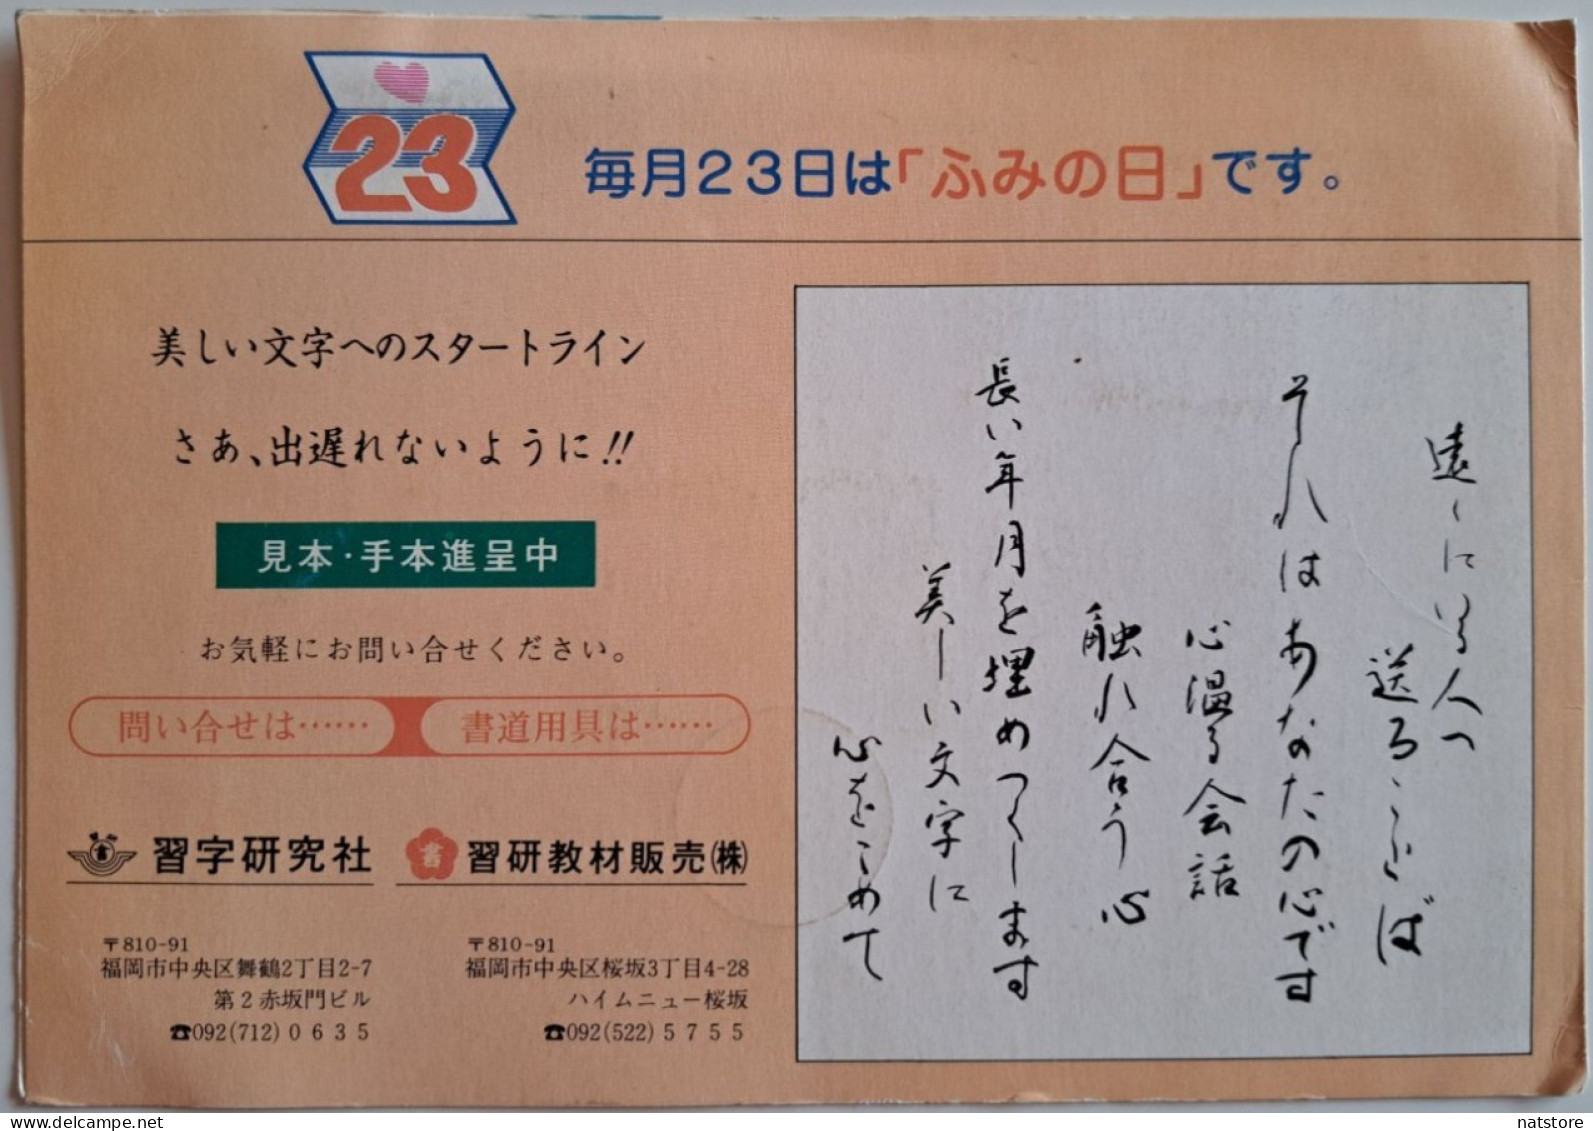 1982..JAPAN..BOOKLET WITH STAMPS+SPECIALCANCELLATION..FUKUOKA'82. GREAT EXHIBITION..Japanese Songs - Brieven En Documenten